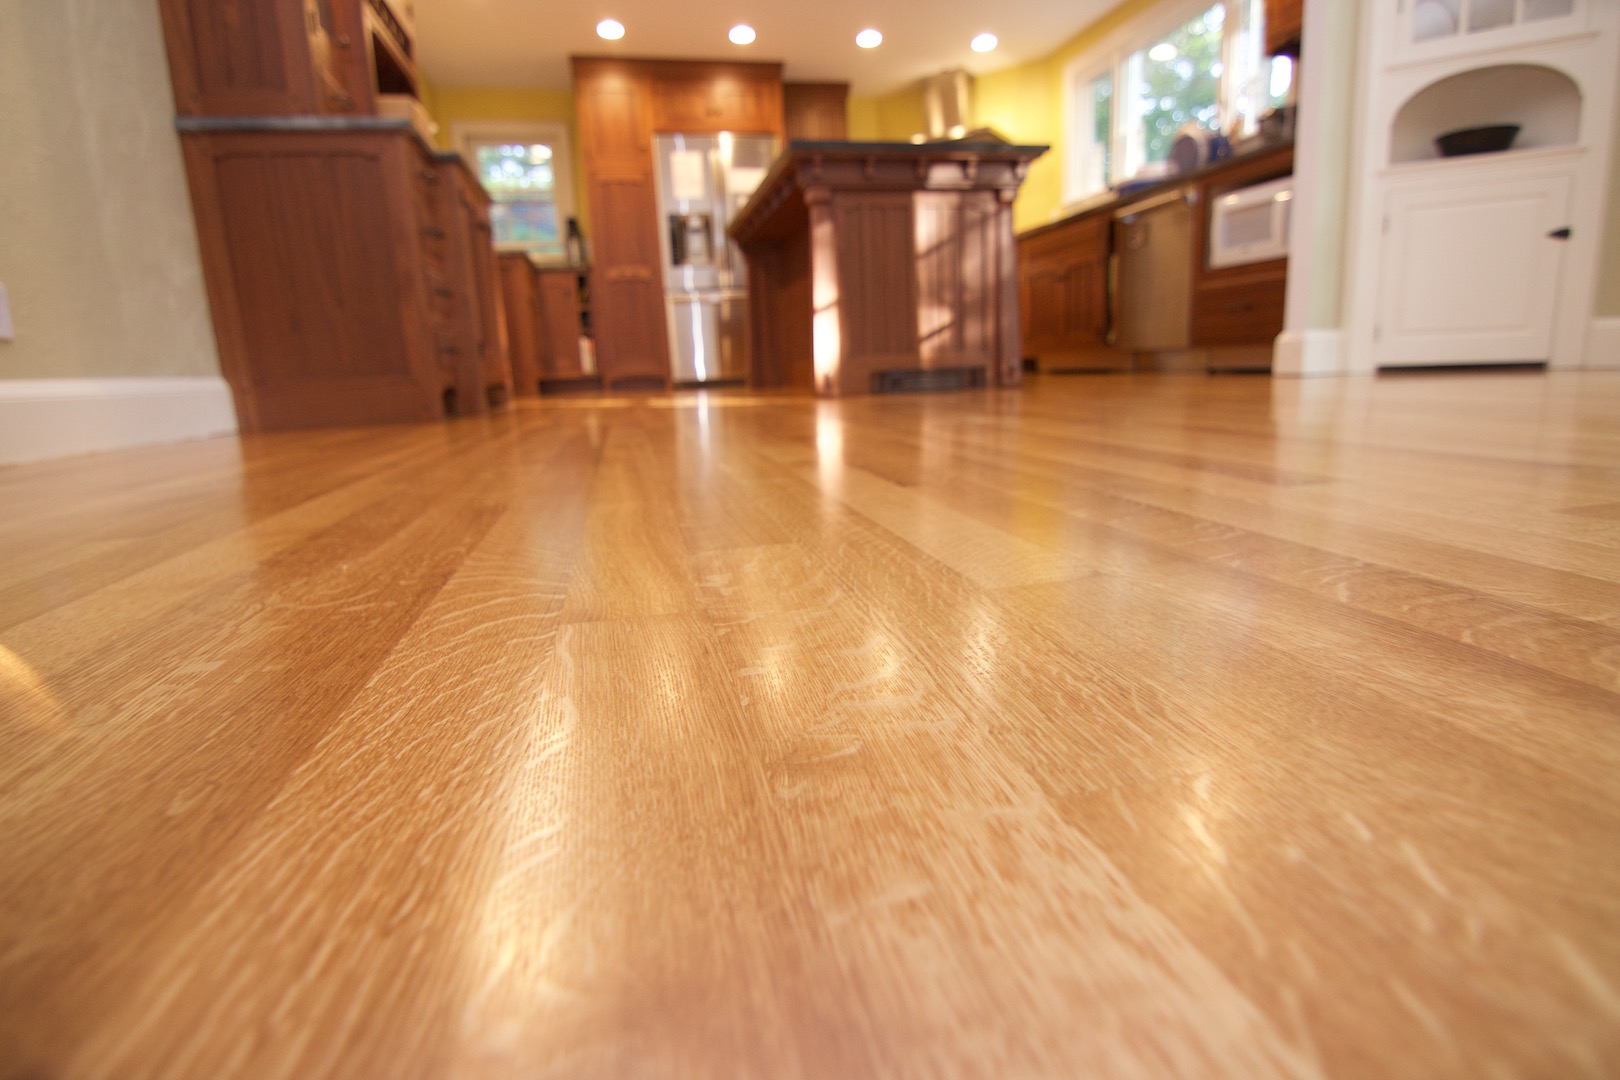 Polyurethane Wood Floor Finish How To, How To Remove Polyurethane From Hardwood Floors